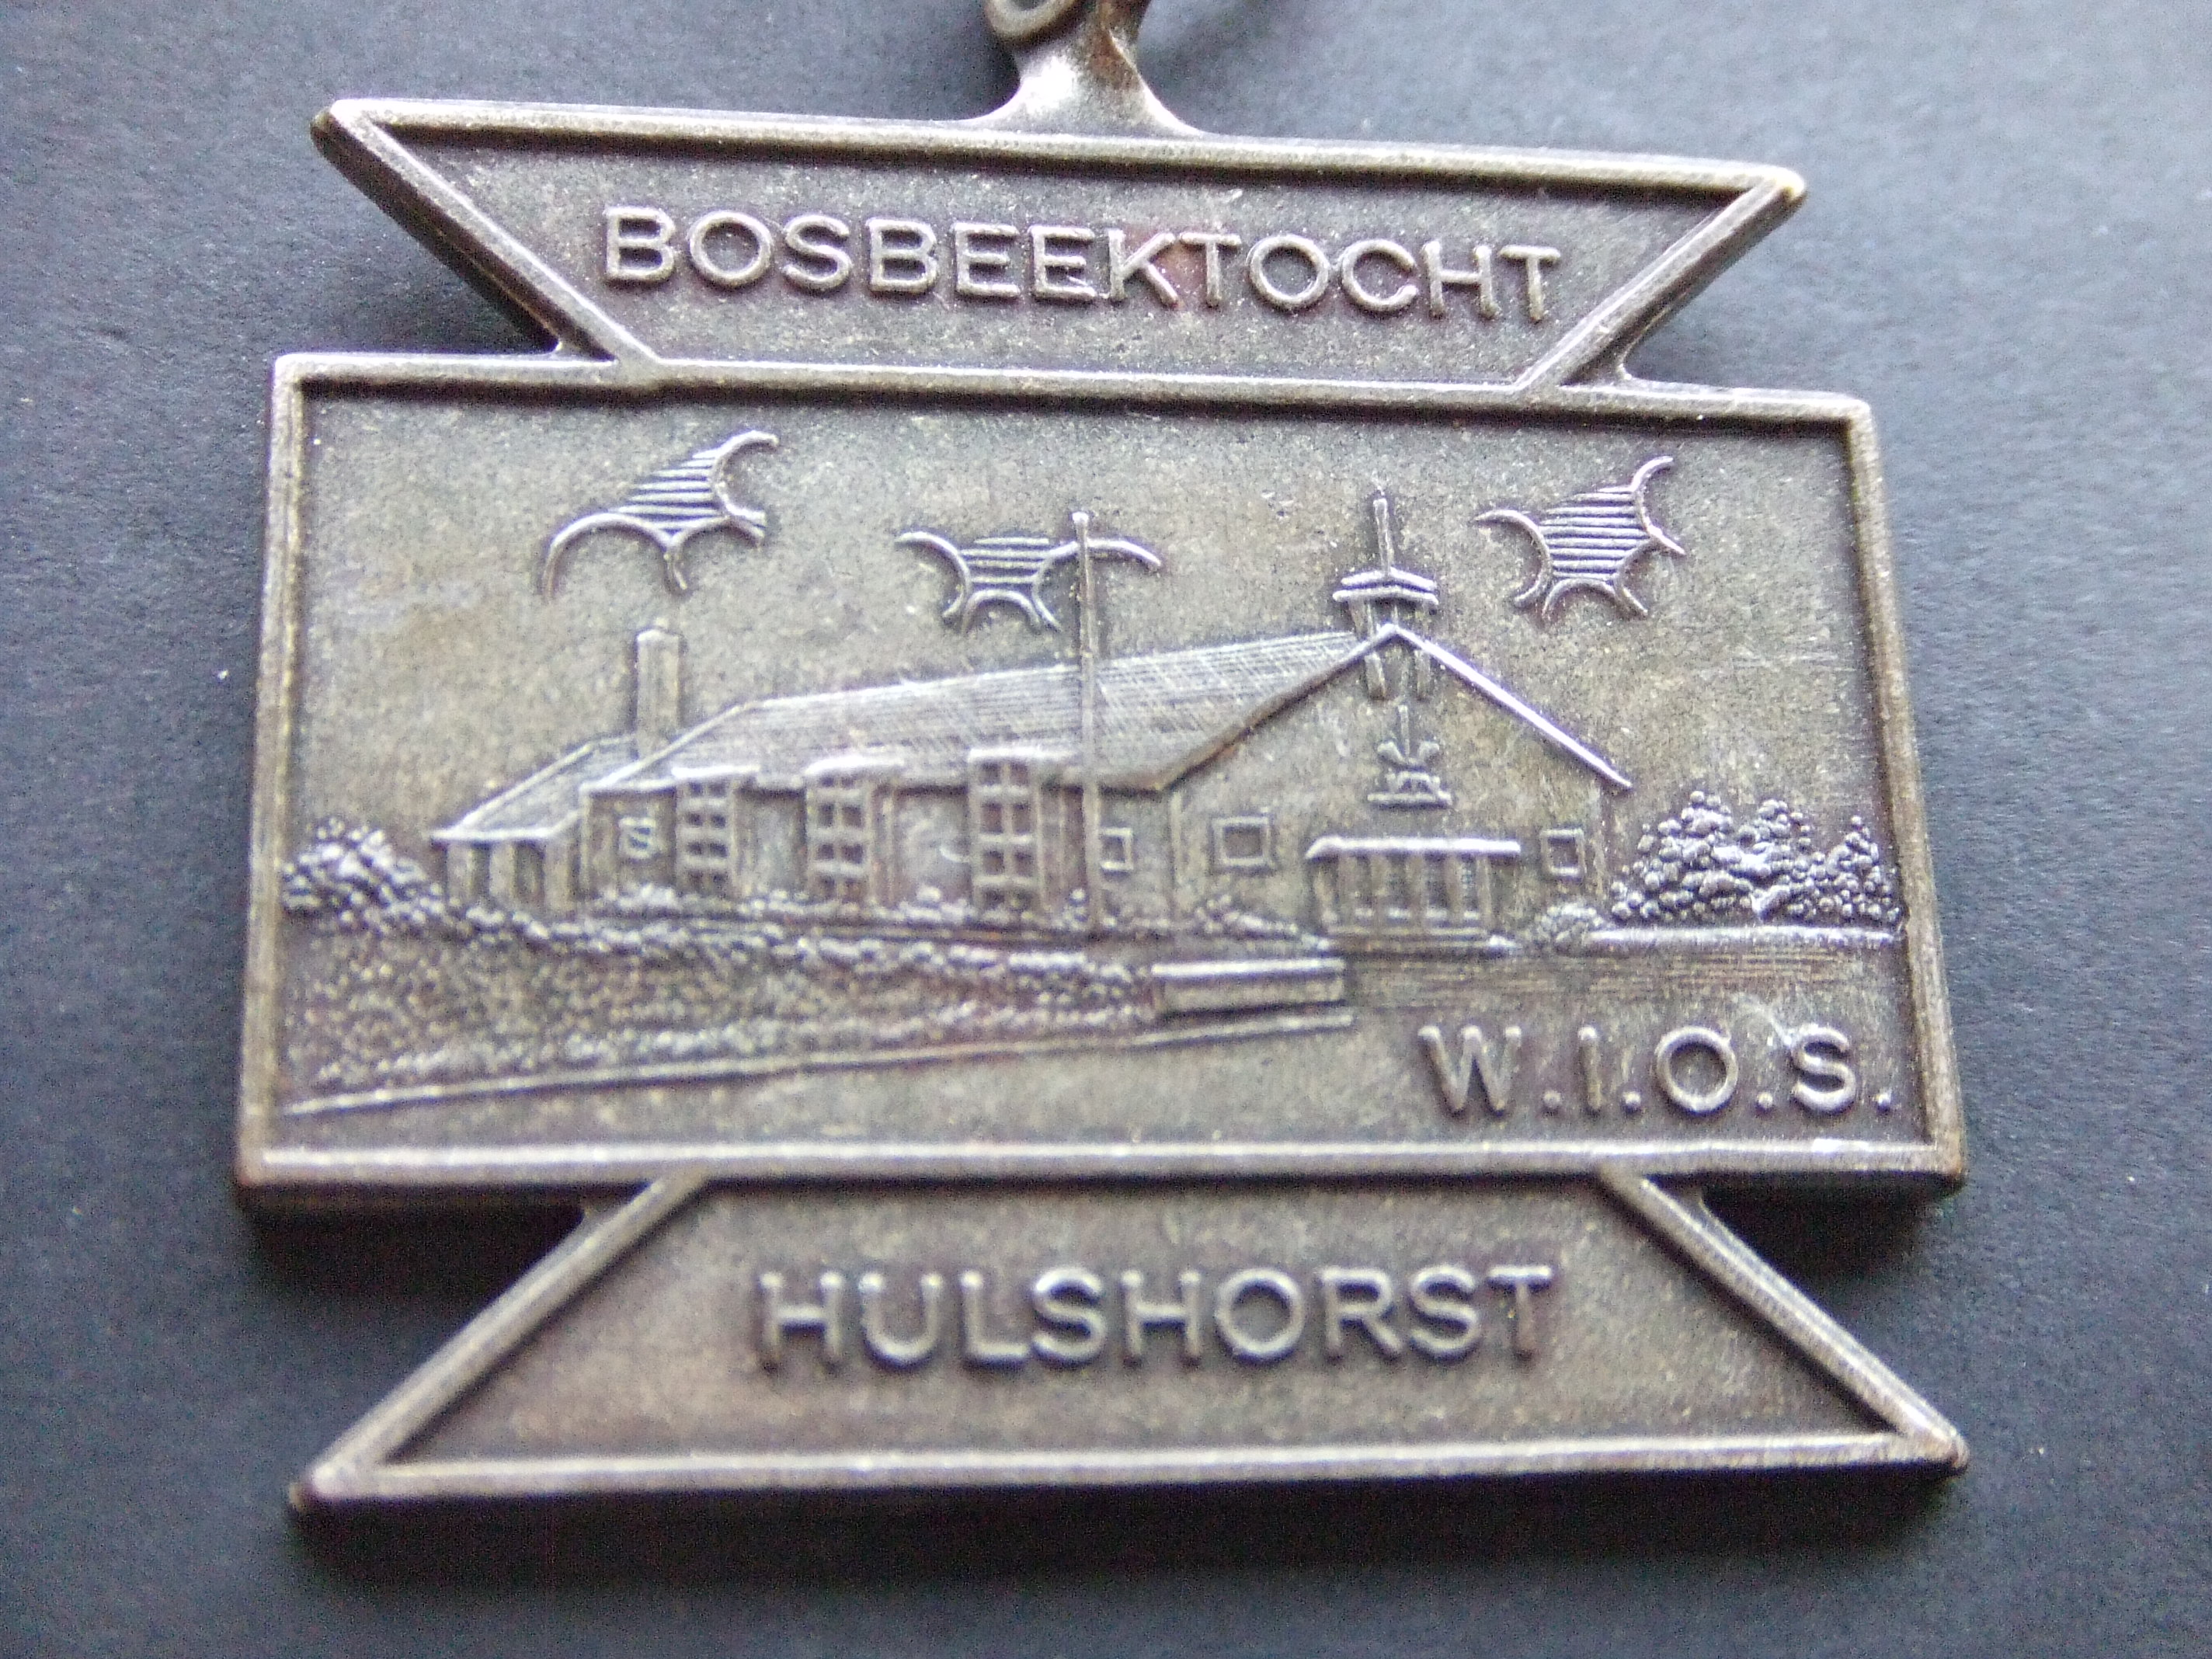 Wandelsportvereniging W.I.O.S. Hulshorst gemeente Nunspeet, onbekend gebouw